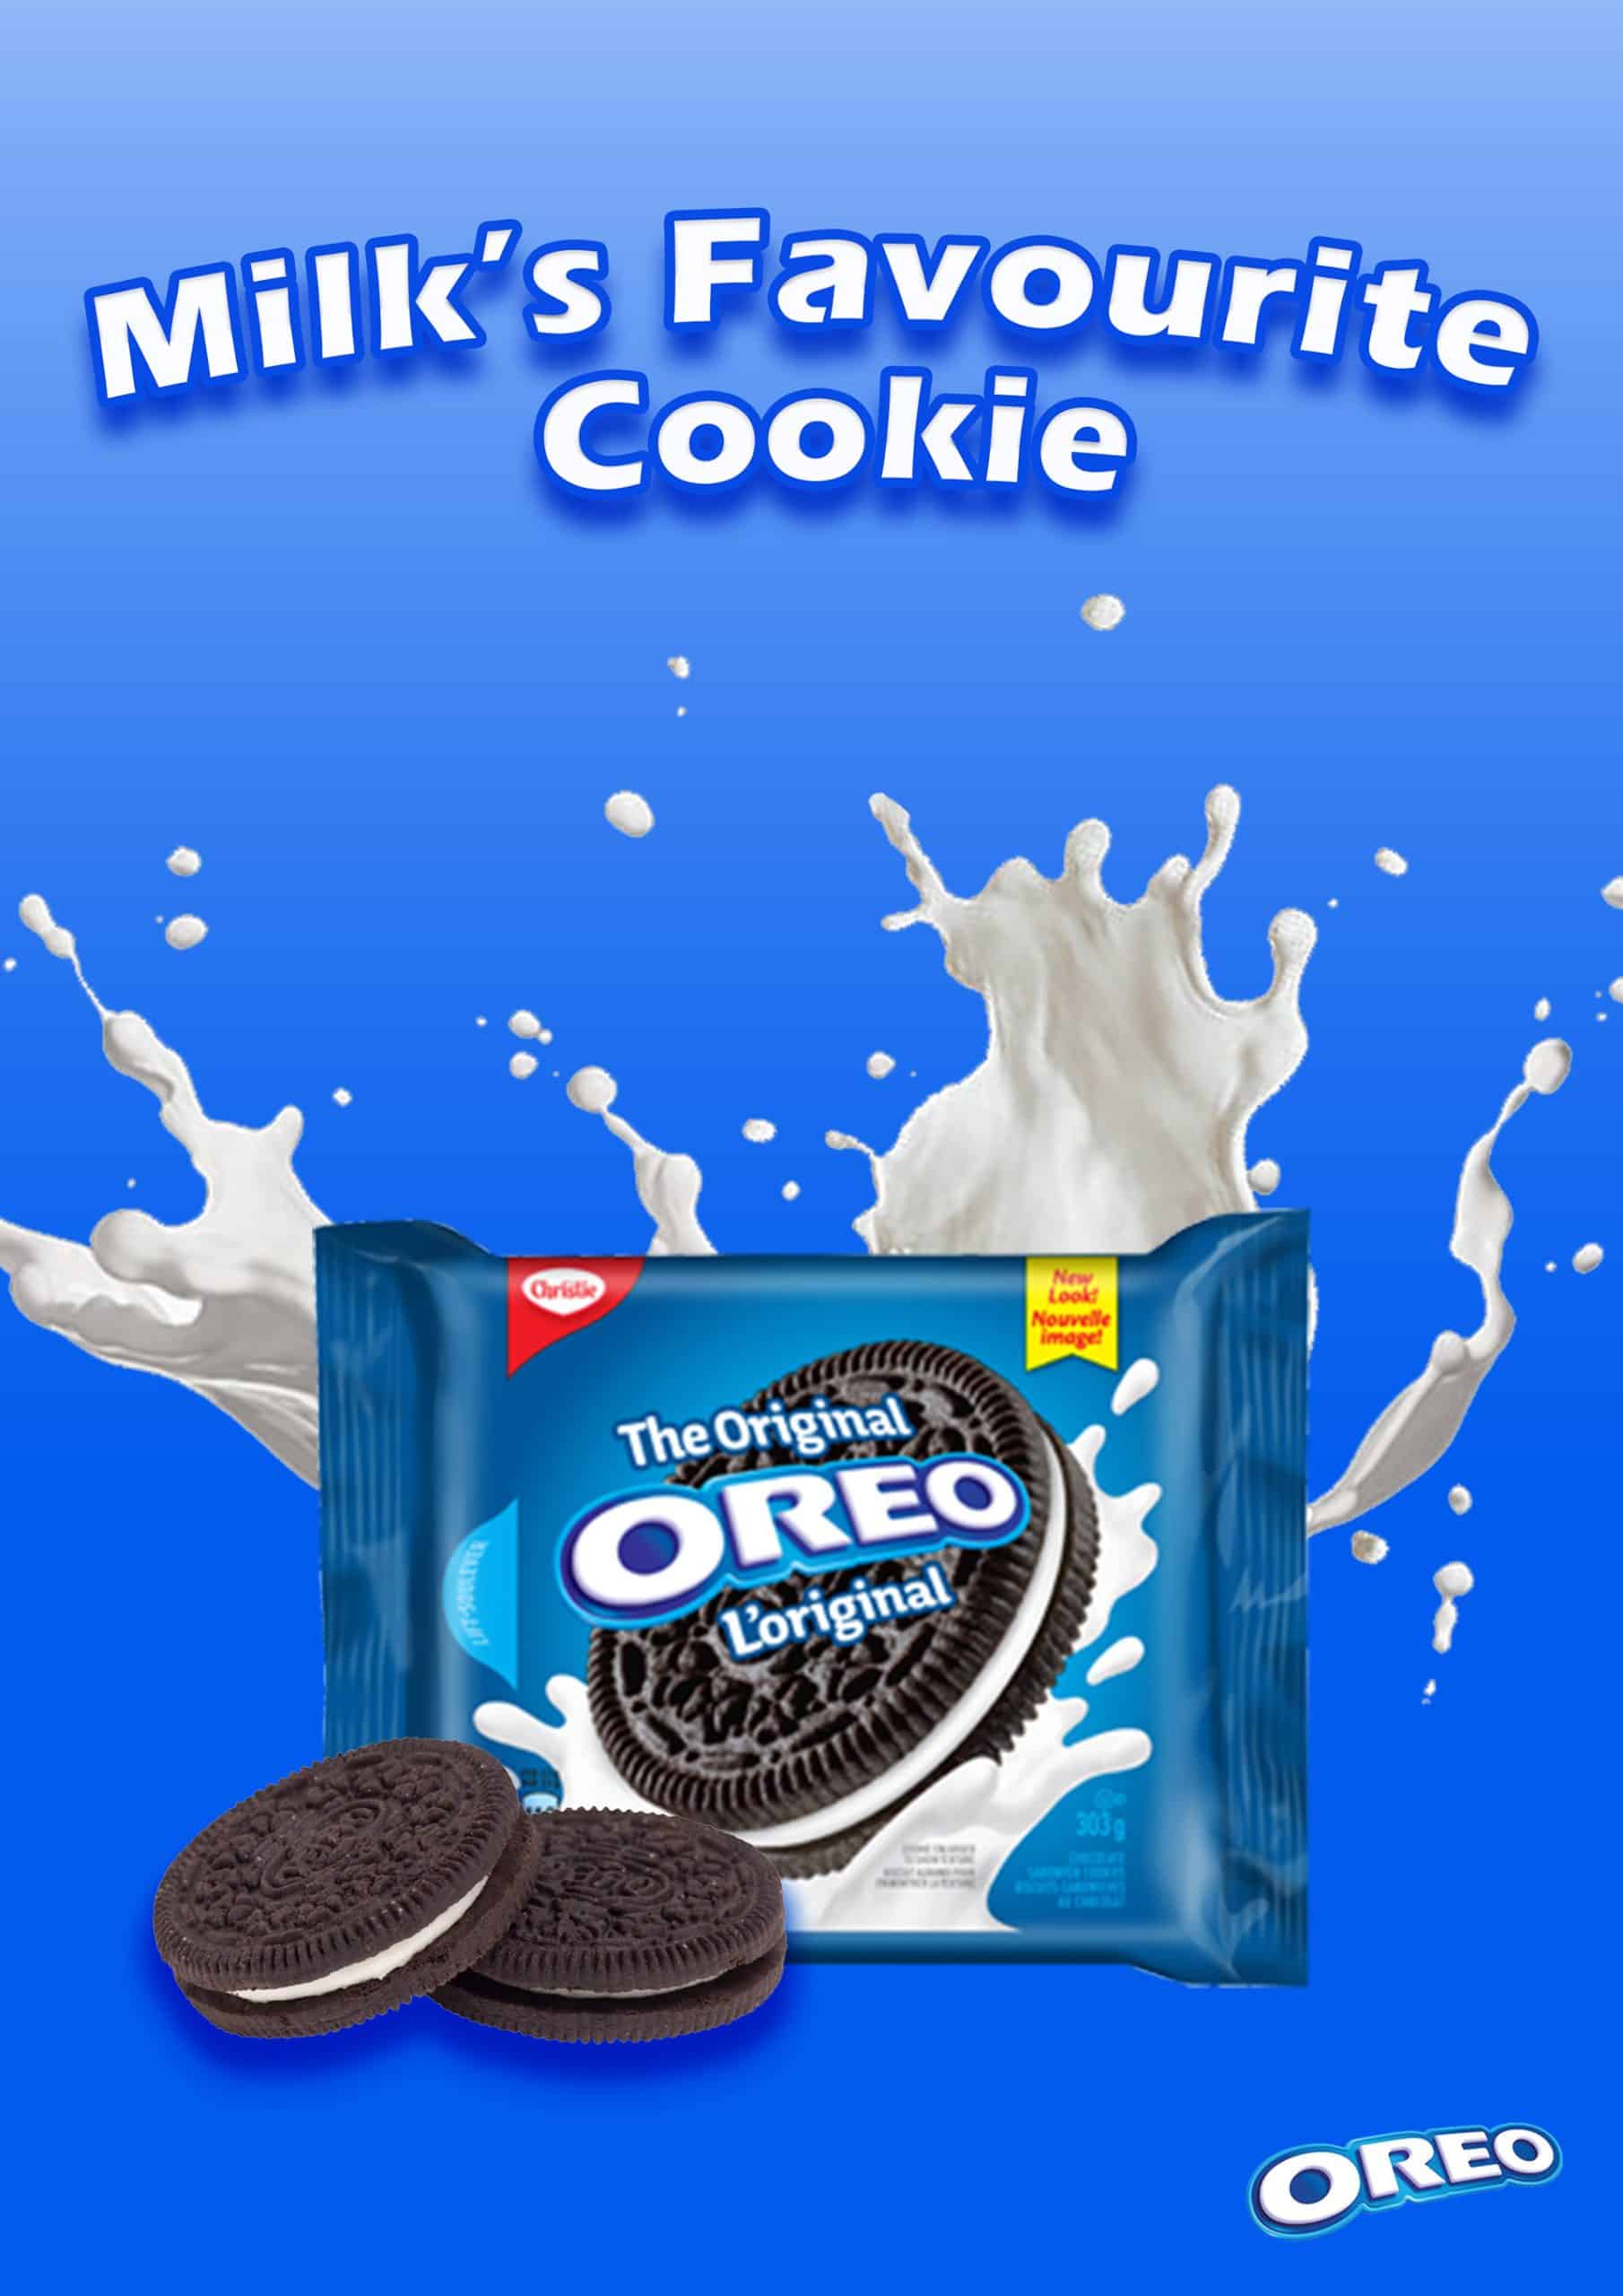 oreo milk's favorite cookie